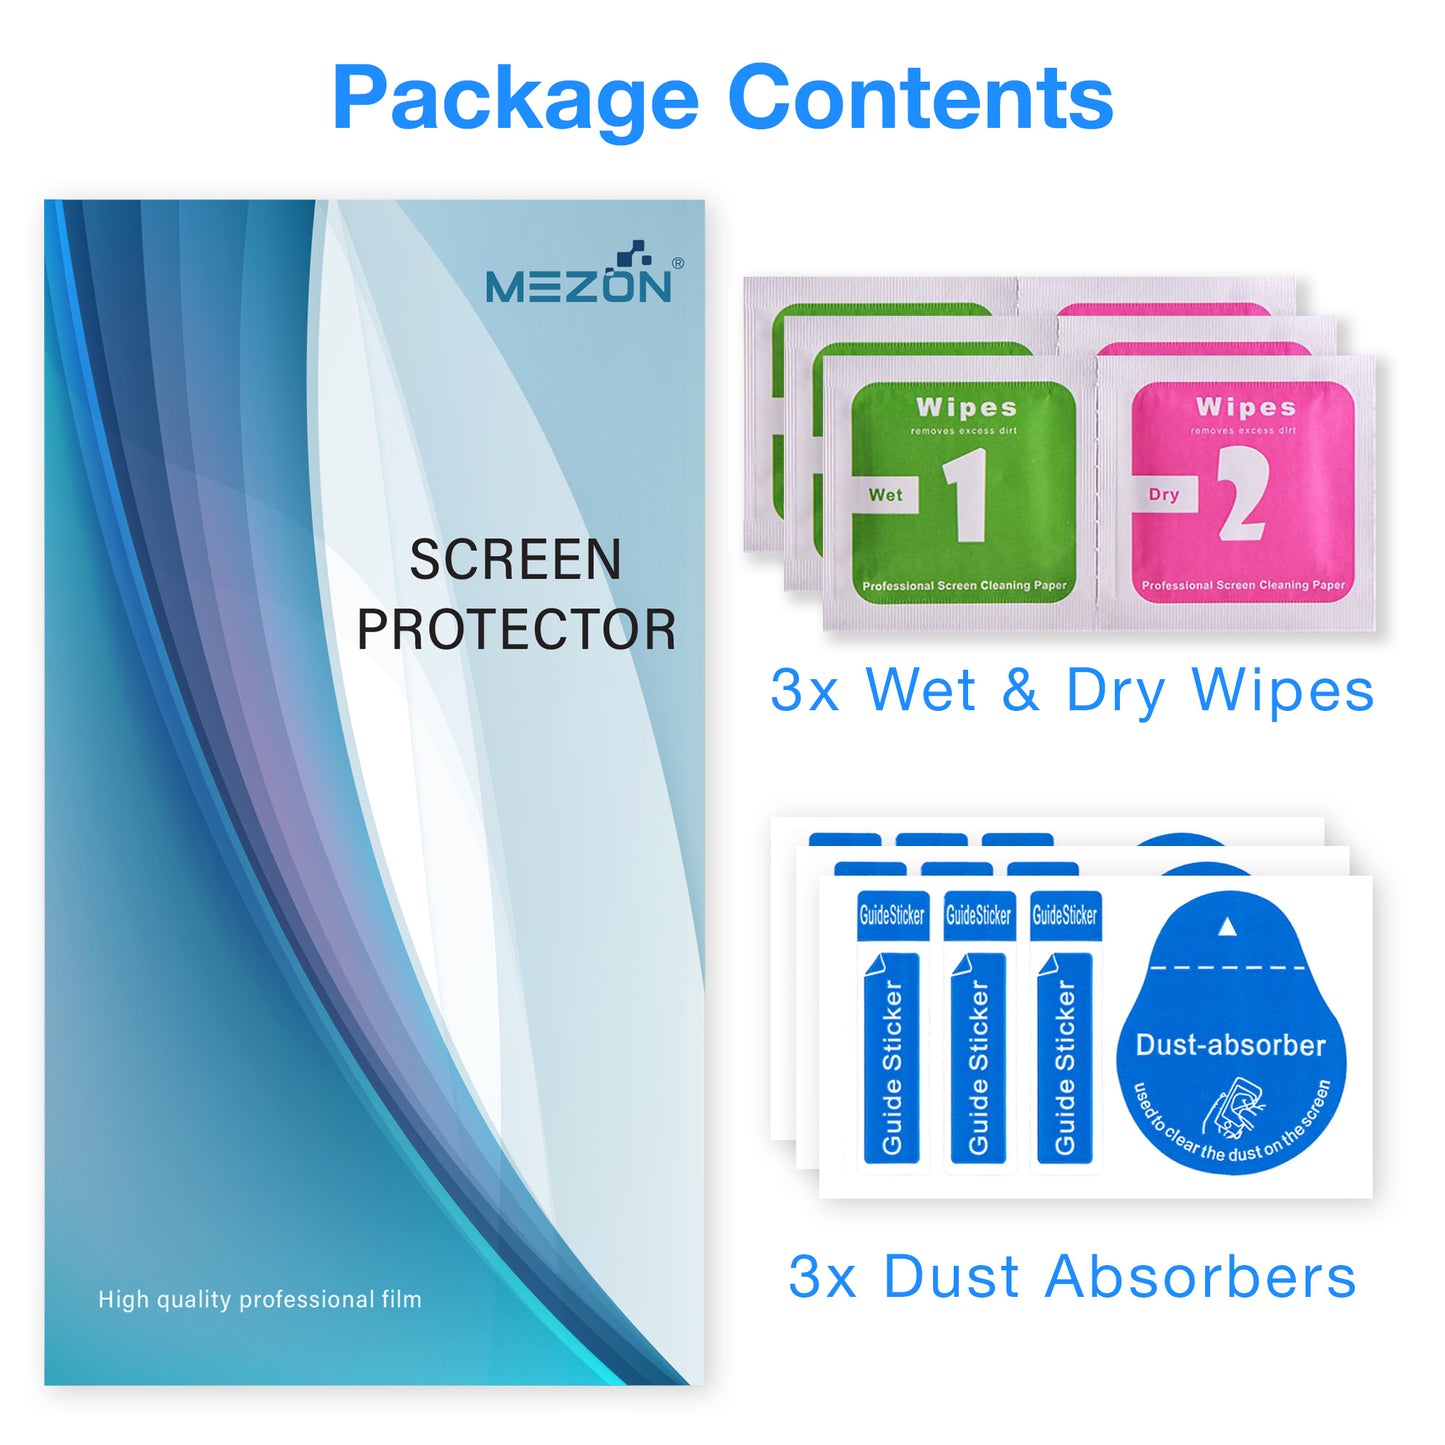 [3 Pack] MEZON Apple iPhone 11 Pro Max (6.5") Anti-Glare Matte Screen Protector Case Friendly Film (iPhone 11 Pro Max, Matte)